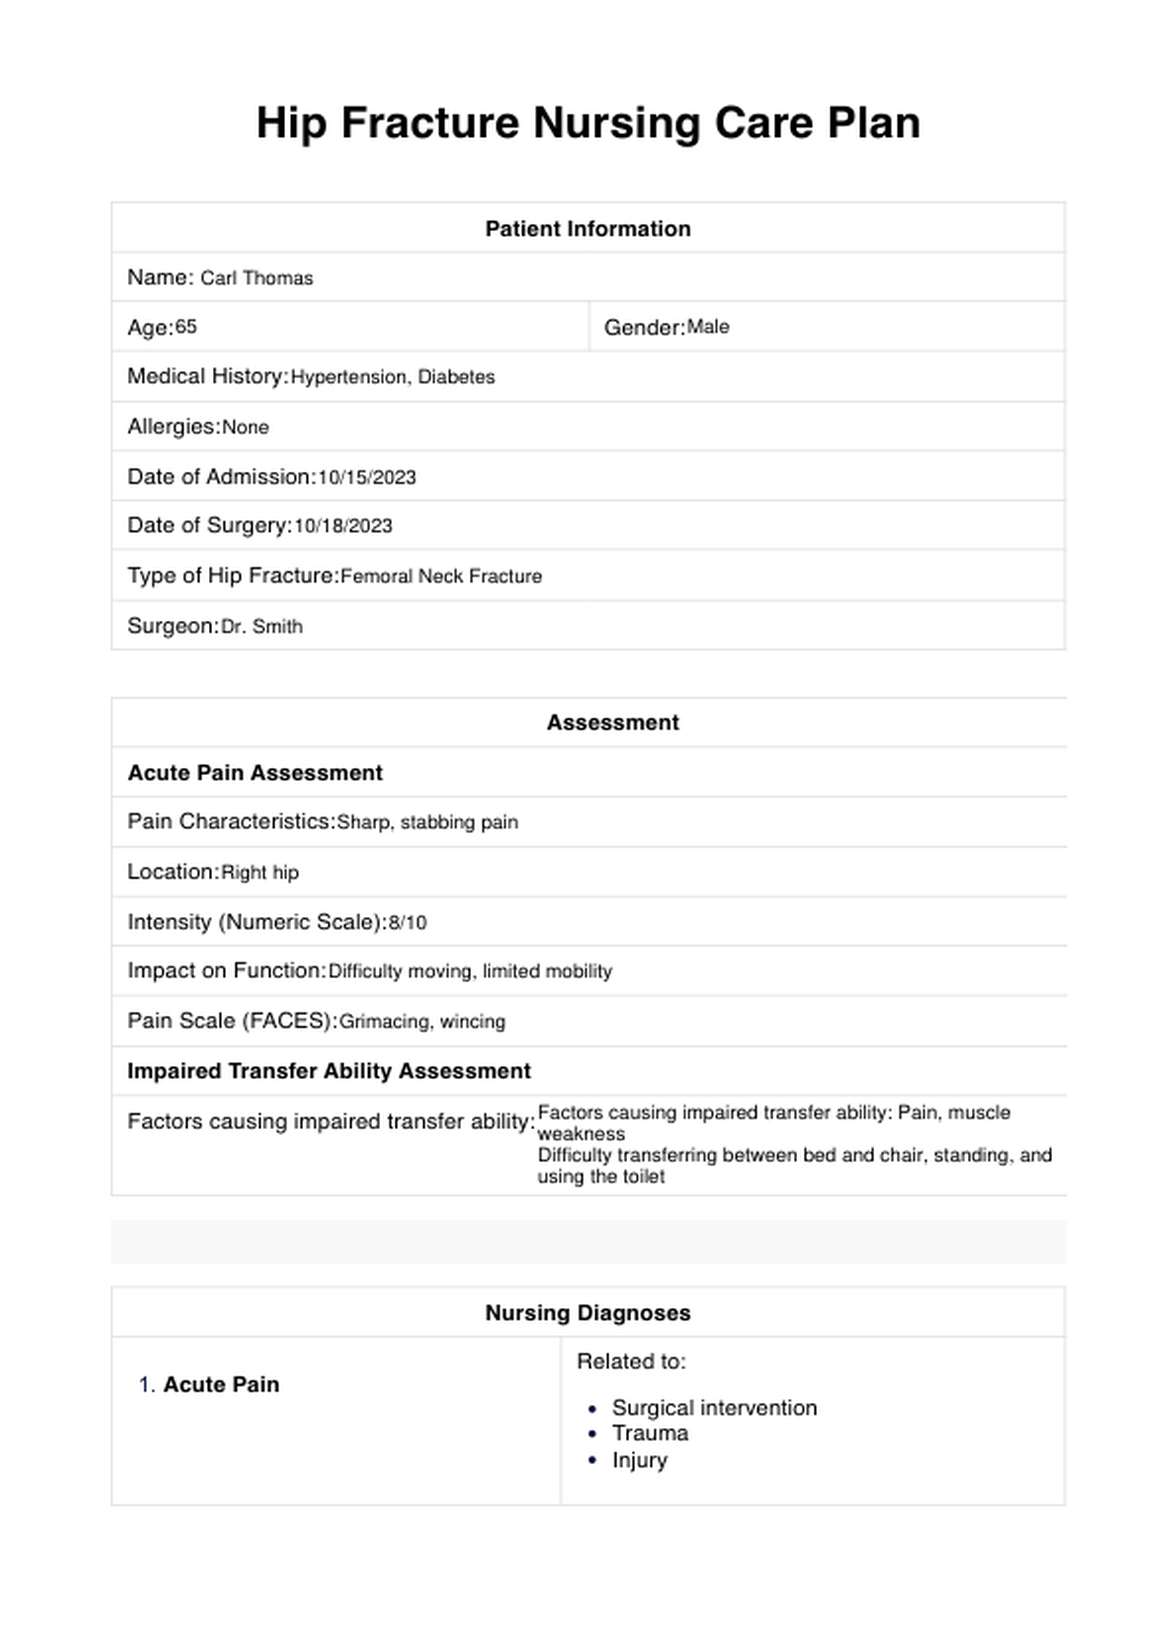 Hip Fracture Nursing Care Plan PDF Example